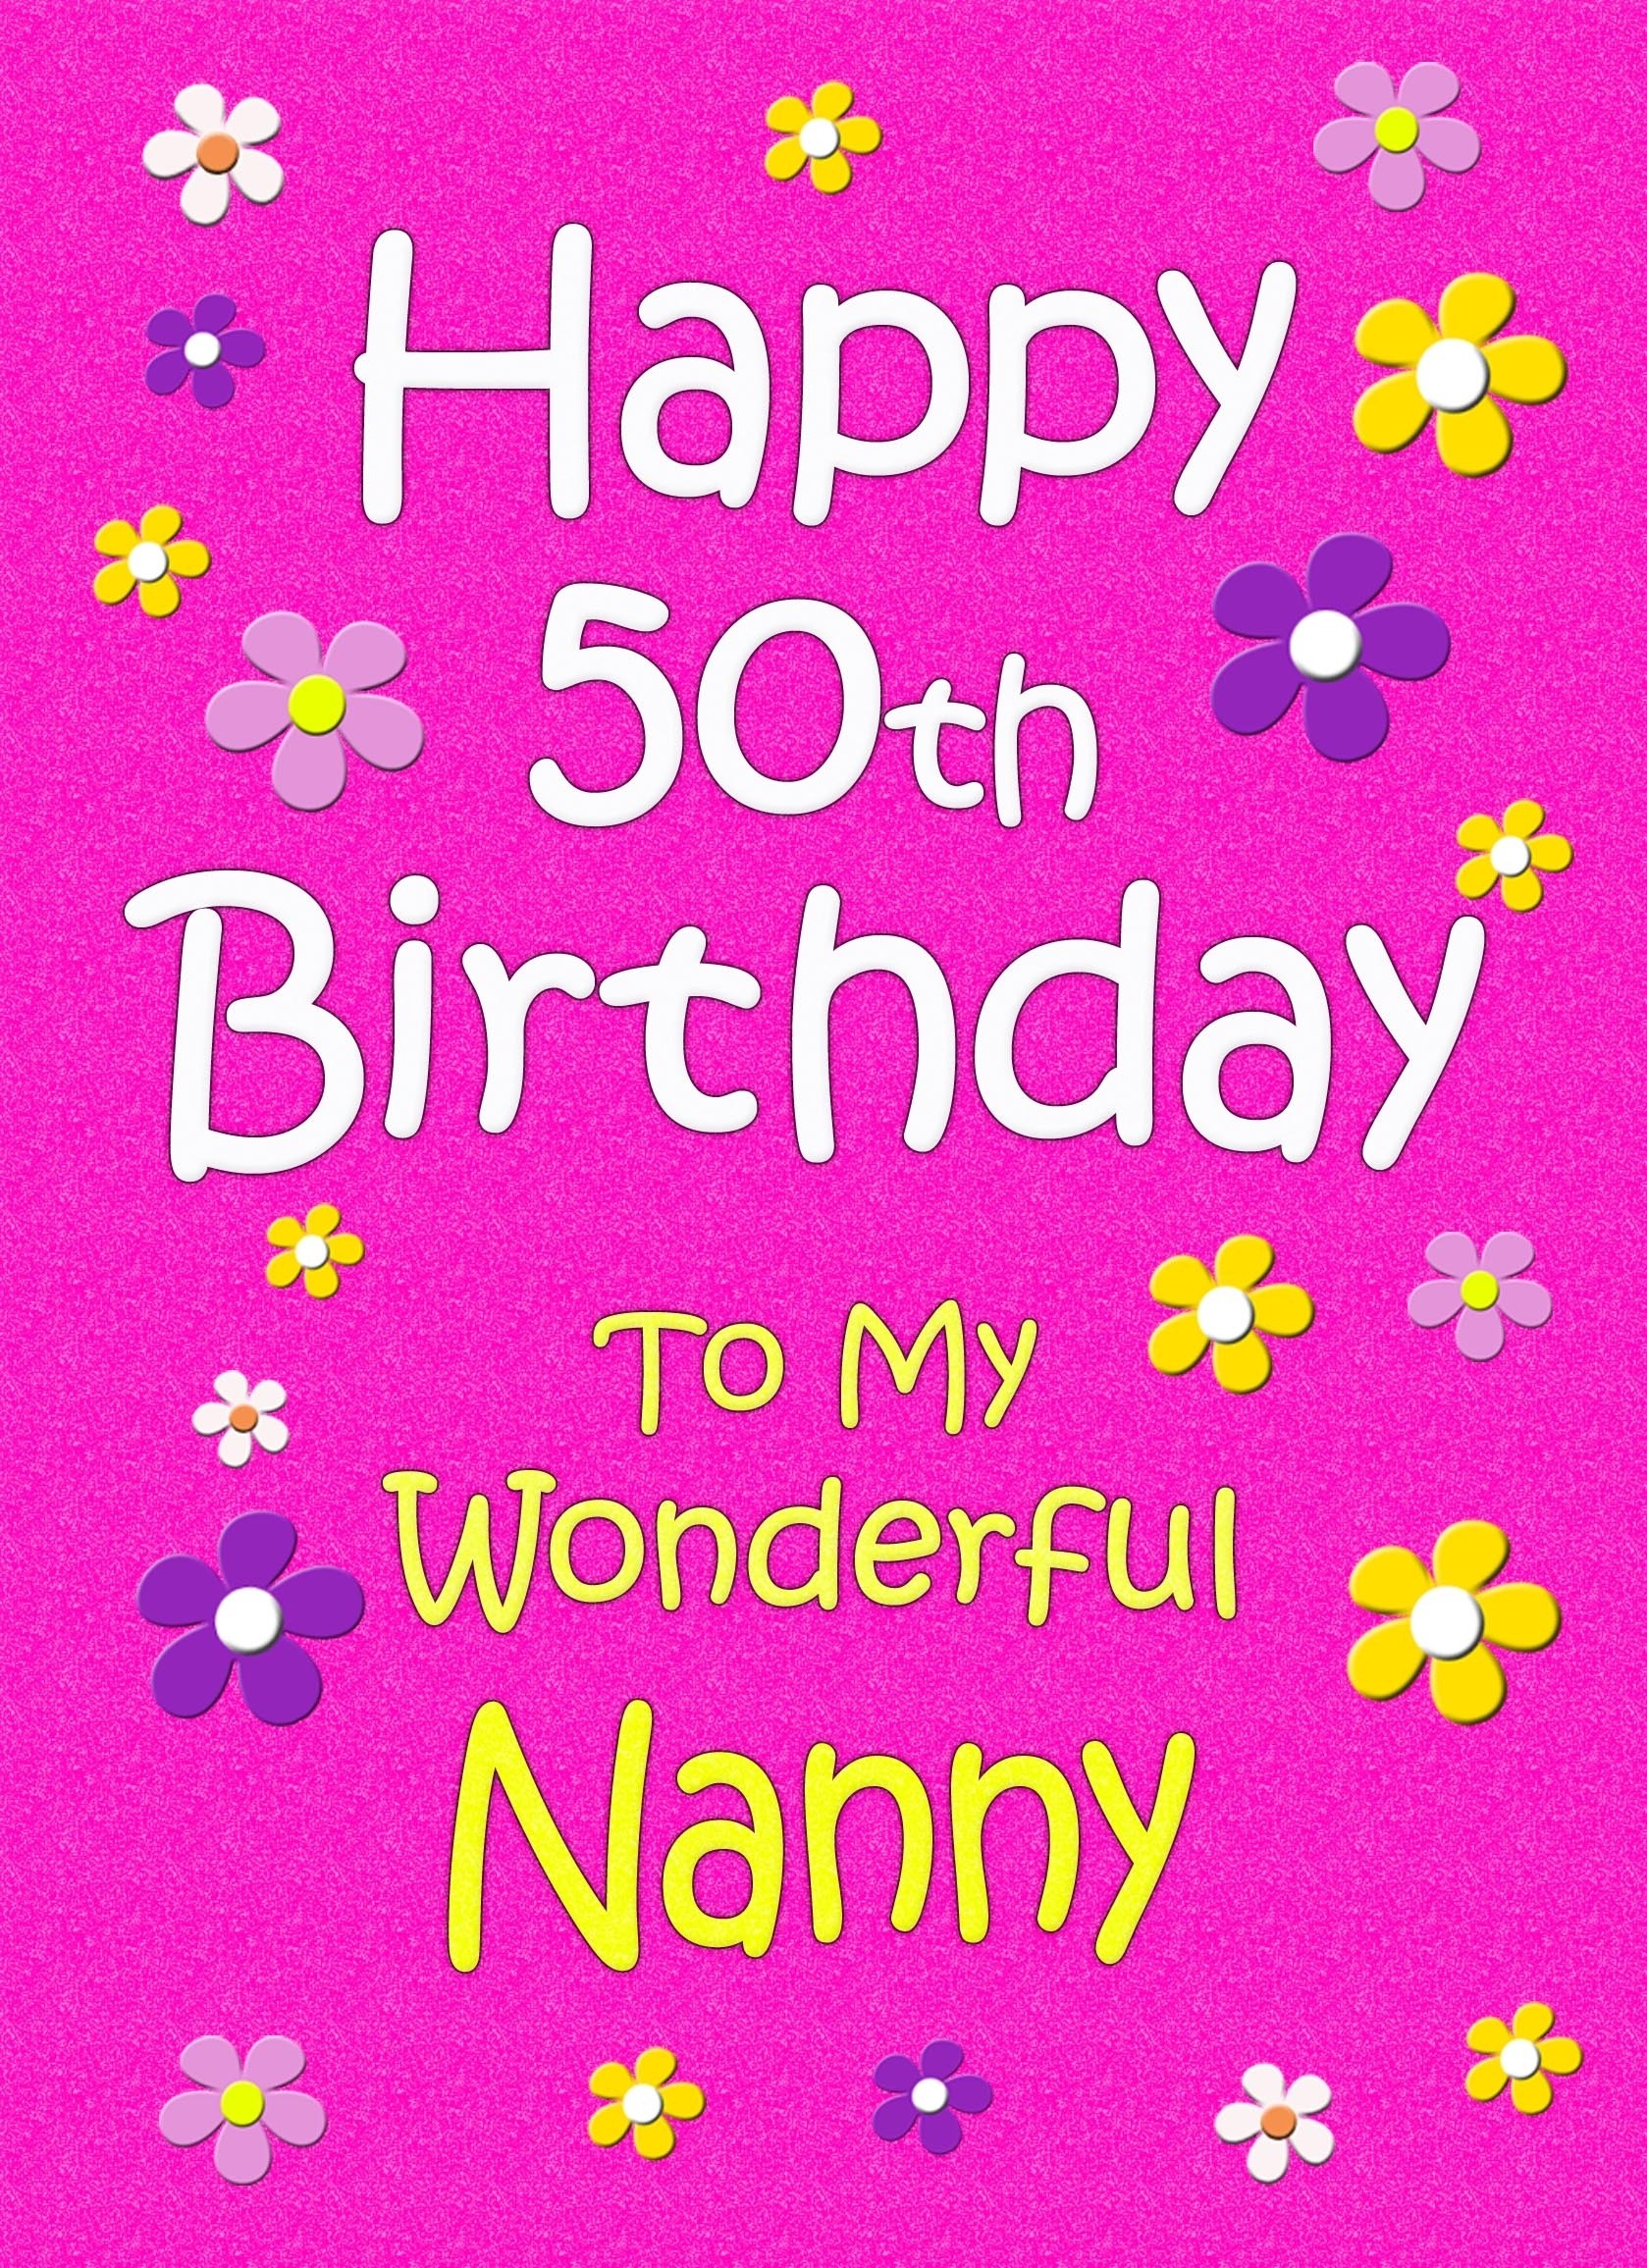 Nanny 50th Birthday Card (Pink)